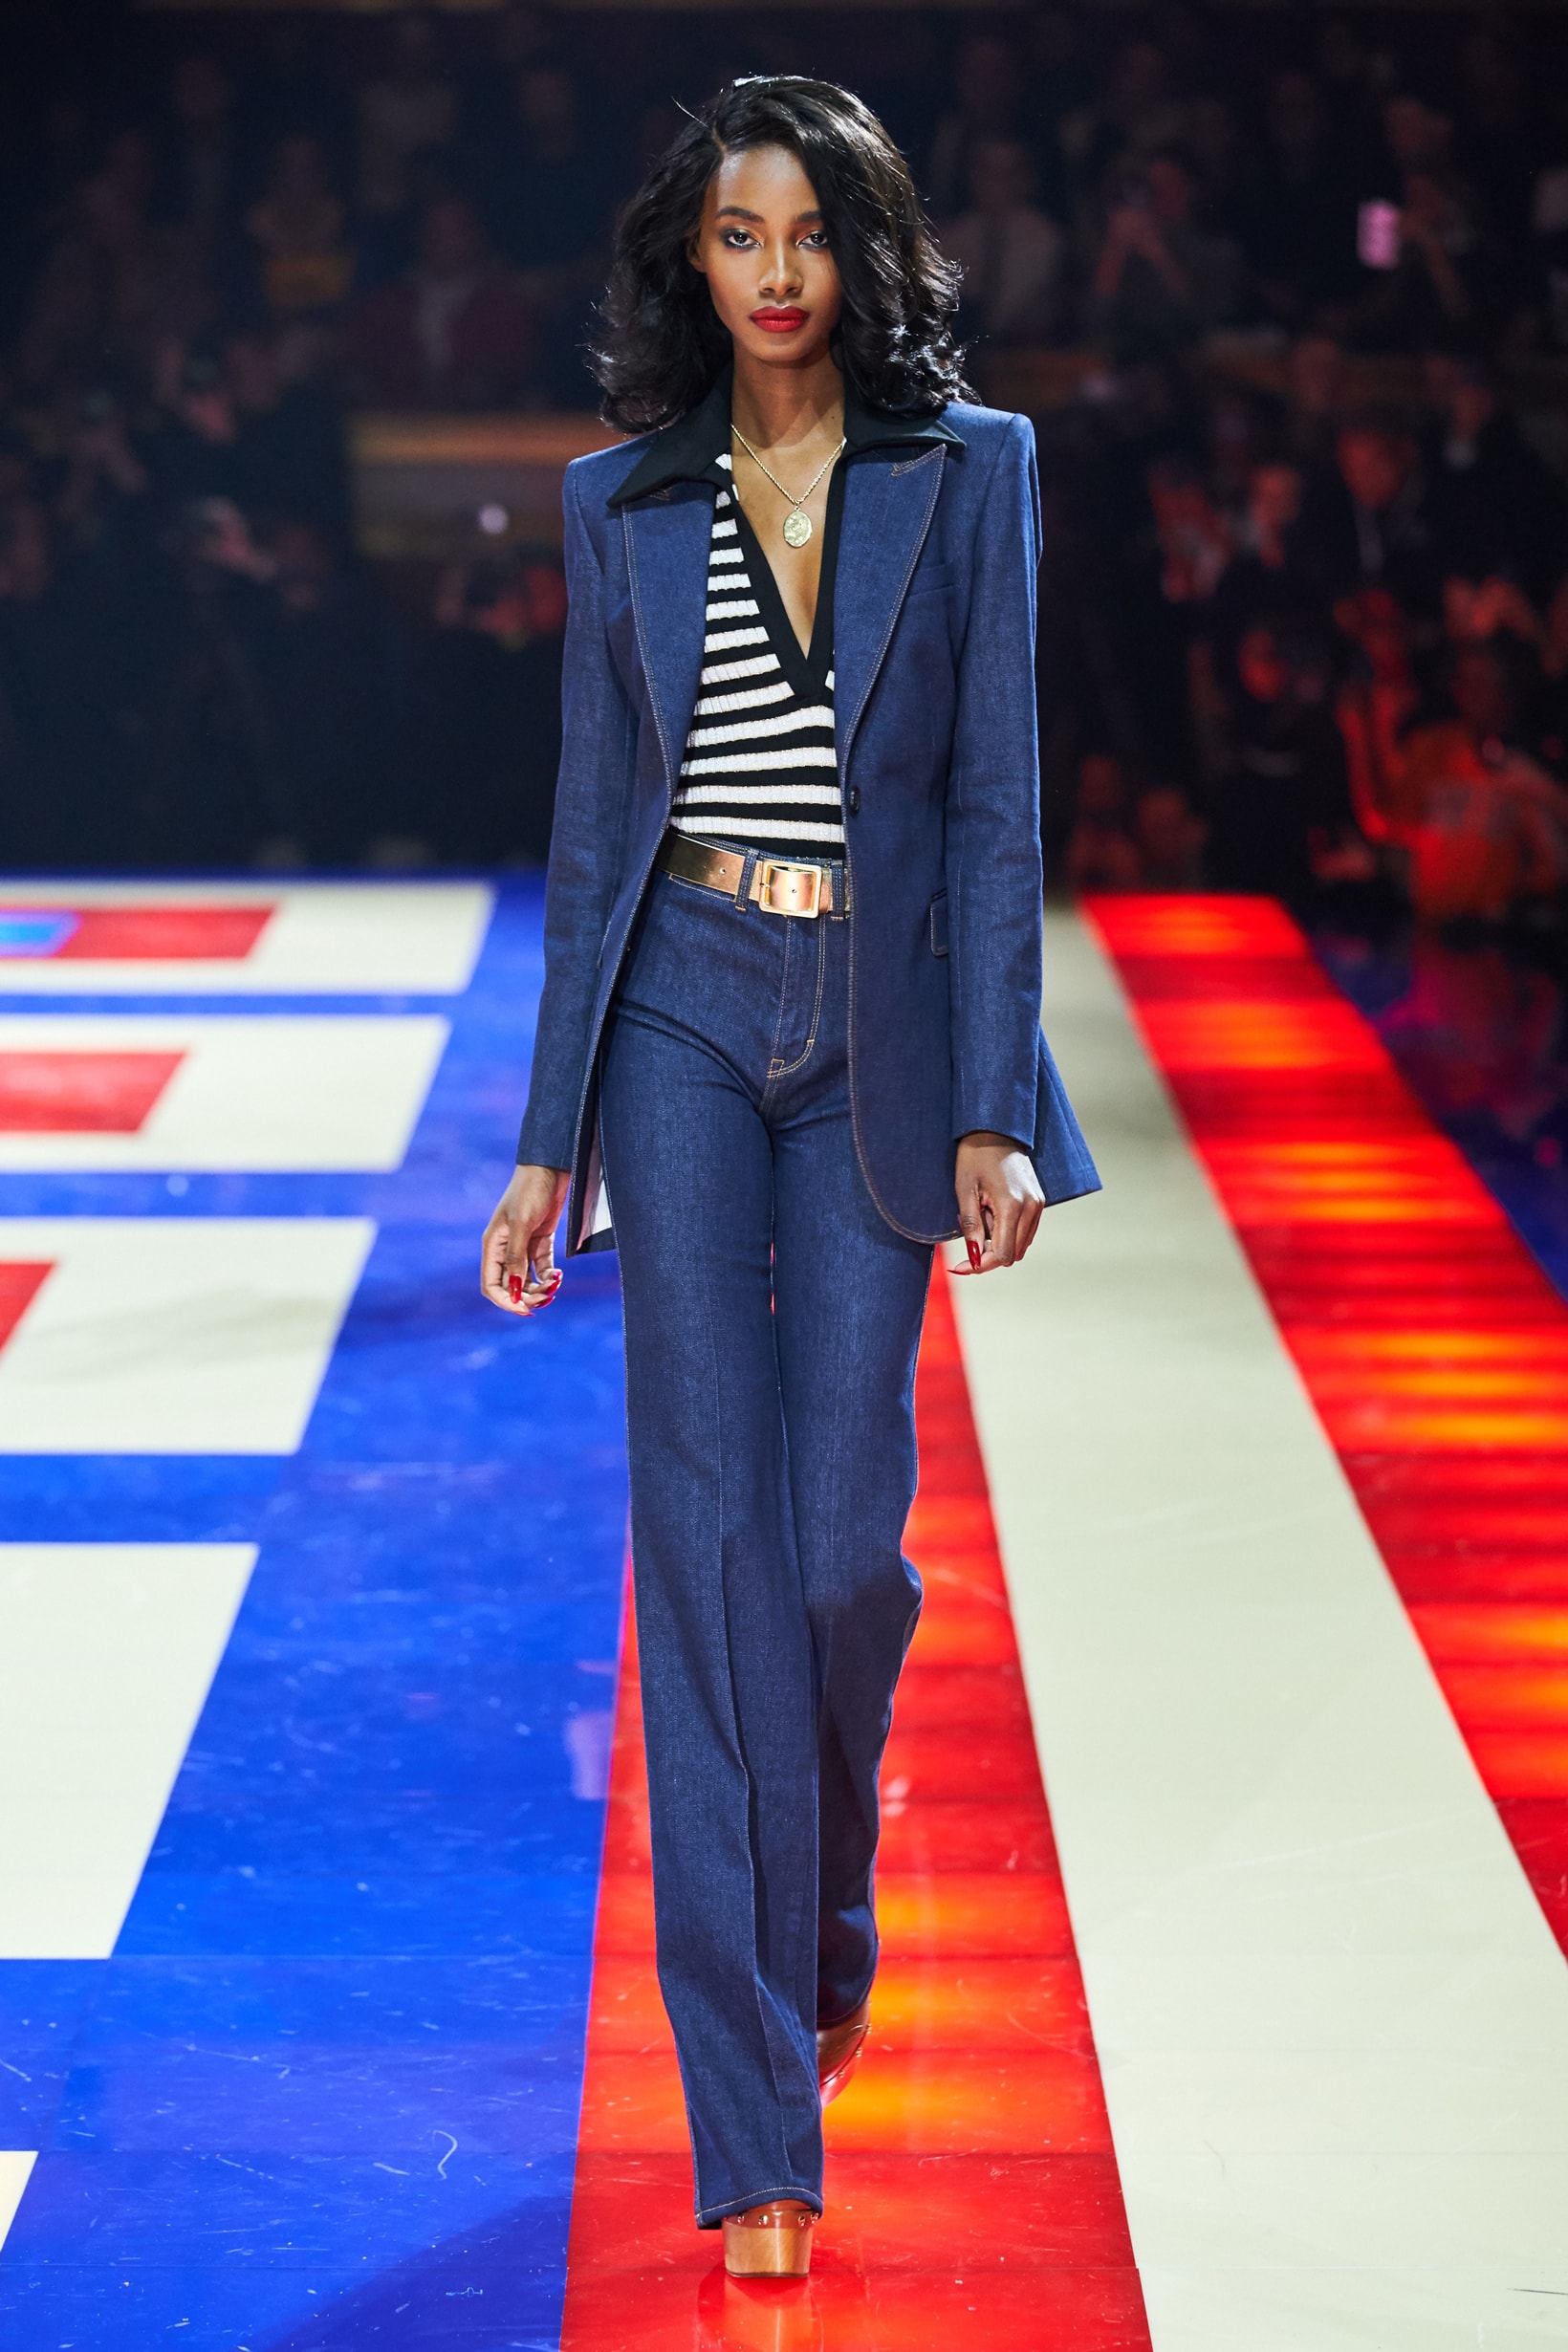 Tommy Hilfiger TommyNow Zendaya Spring 2019 Paris Fashion Week Show Collection Denim Suit Blue